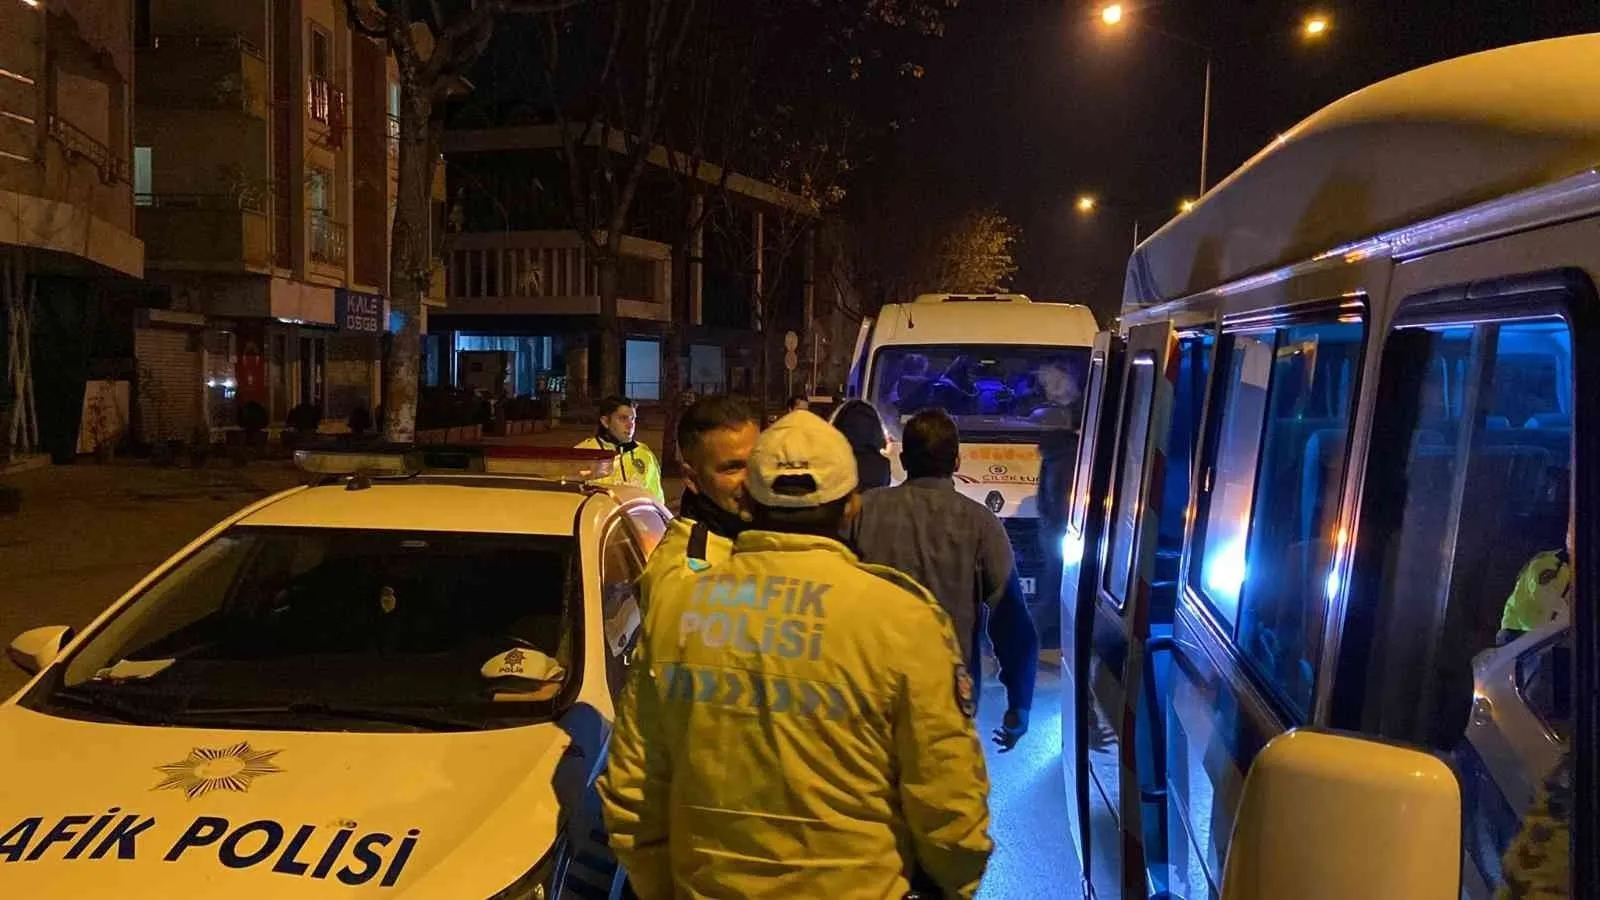 Bursa polisi fark etti, trafikten men edildi; yolcular indirildi #bursa